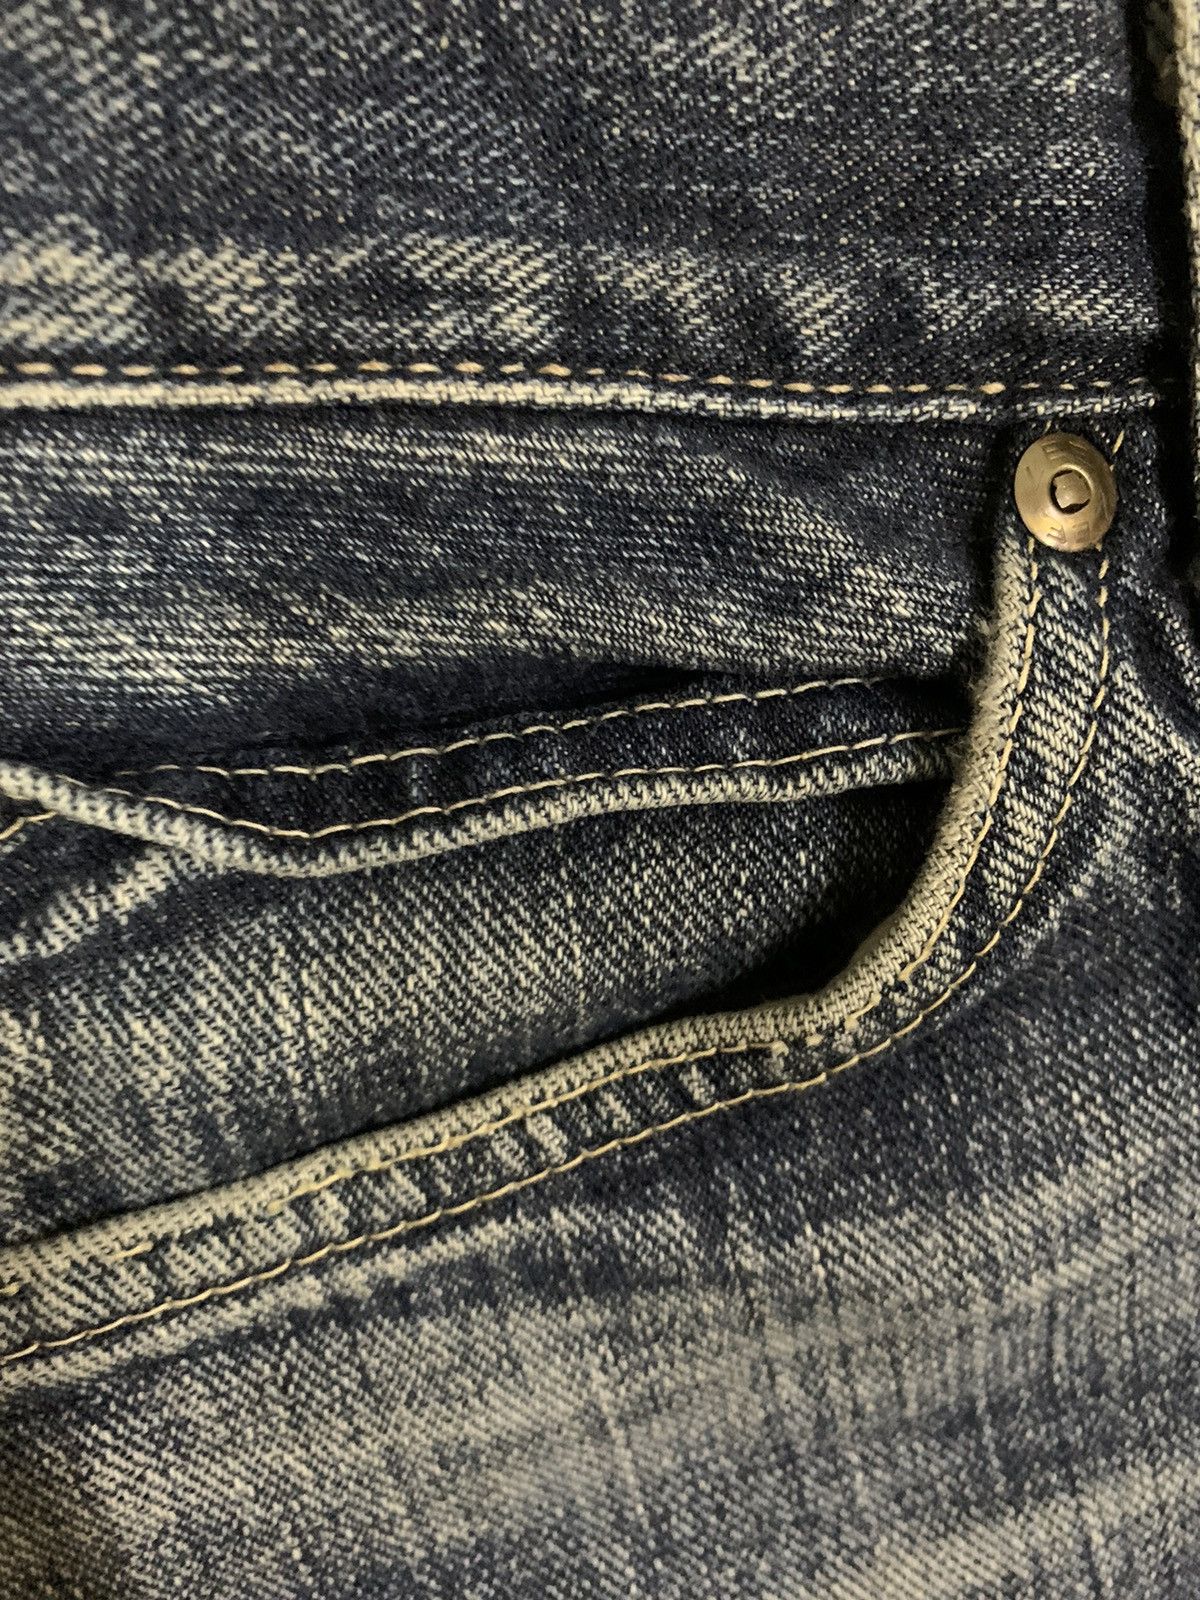 Lee Vintage Lee Cowboy Sanforized Distressed Flared Jeans Size US 31 - 6 Thumbnail